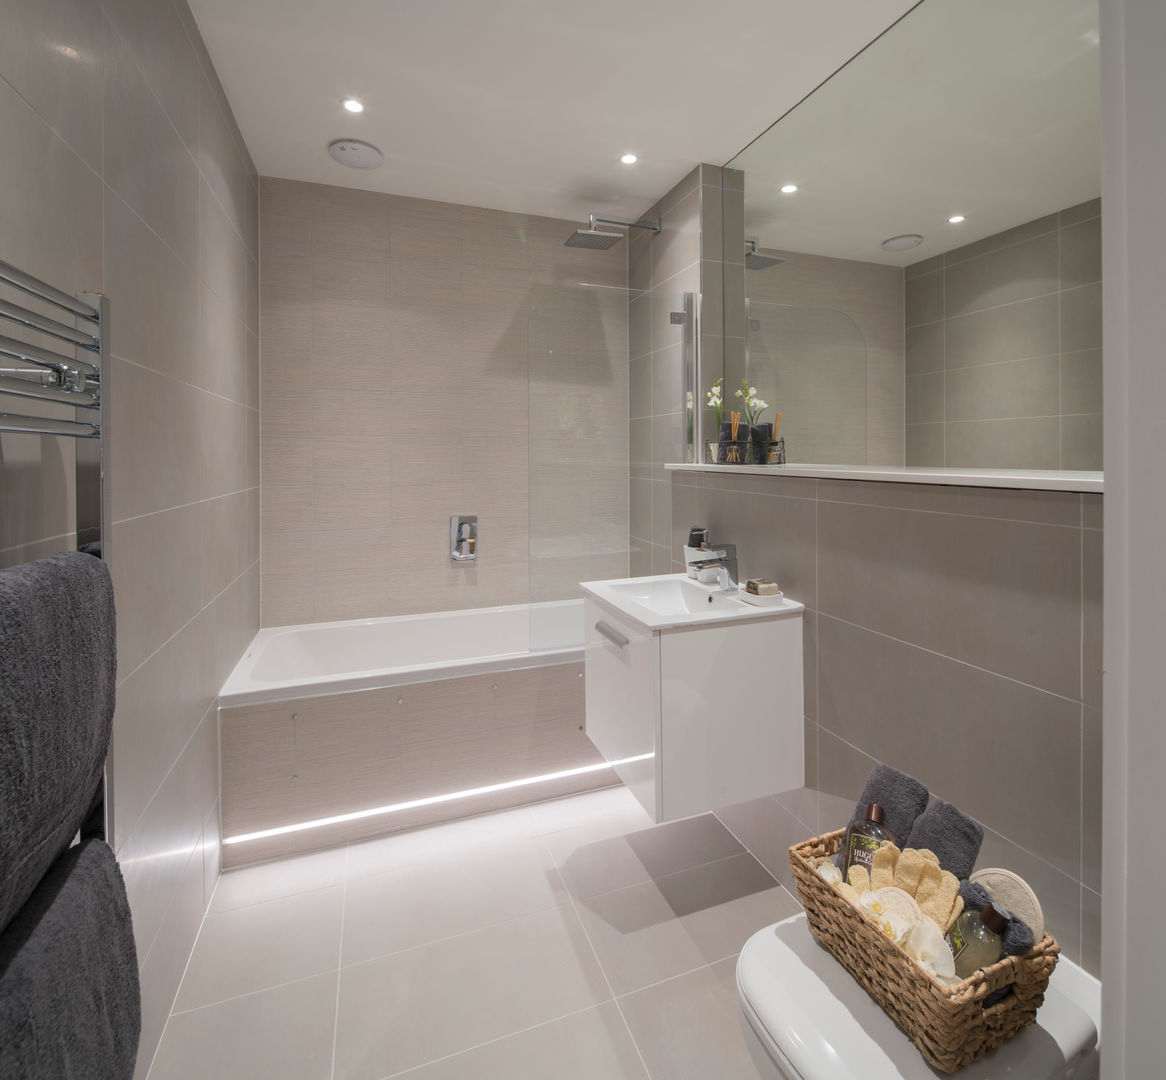 Station Rd, New Barnet Jigsaw Interior Architecture & Design Ванная комната в стиле модерн luxury,bathroom,tiles,mirror,bronze,london,show home